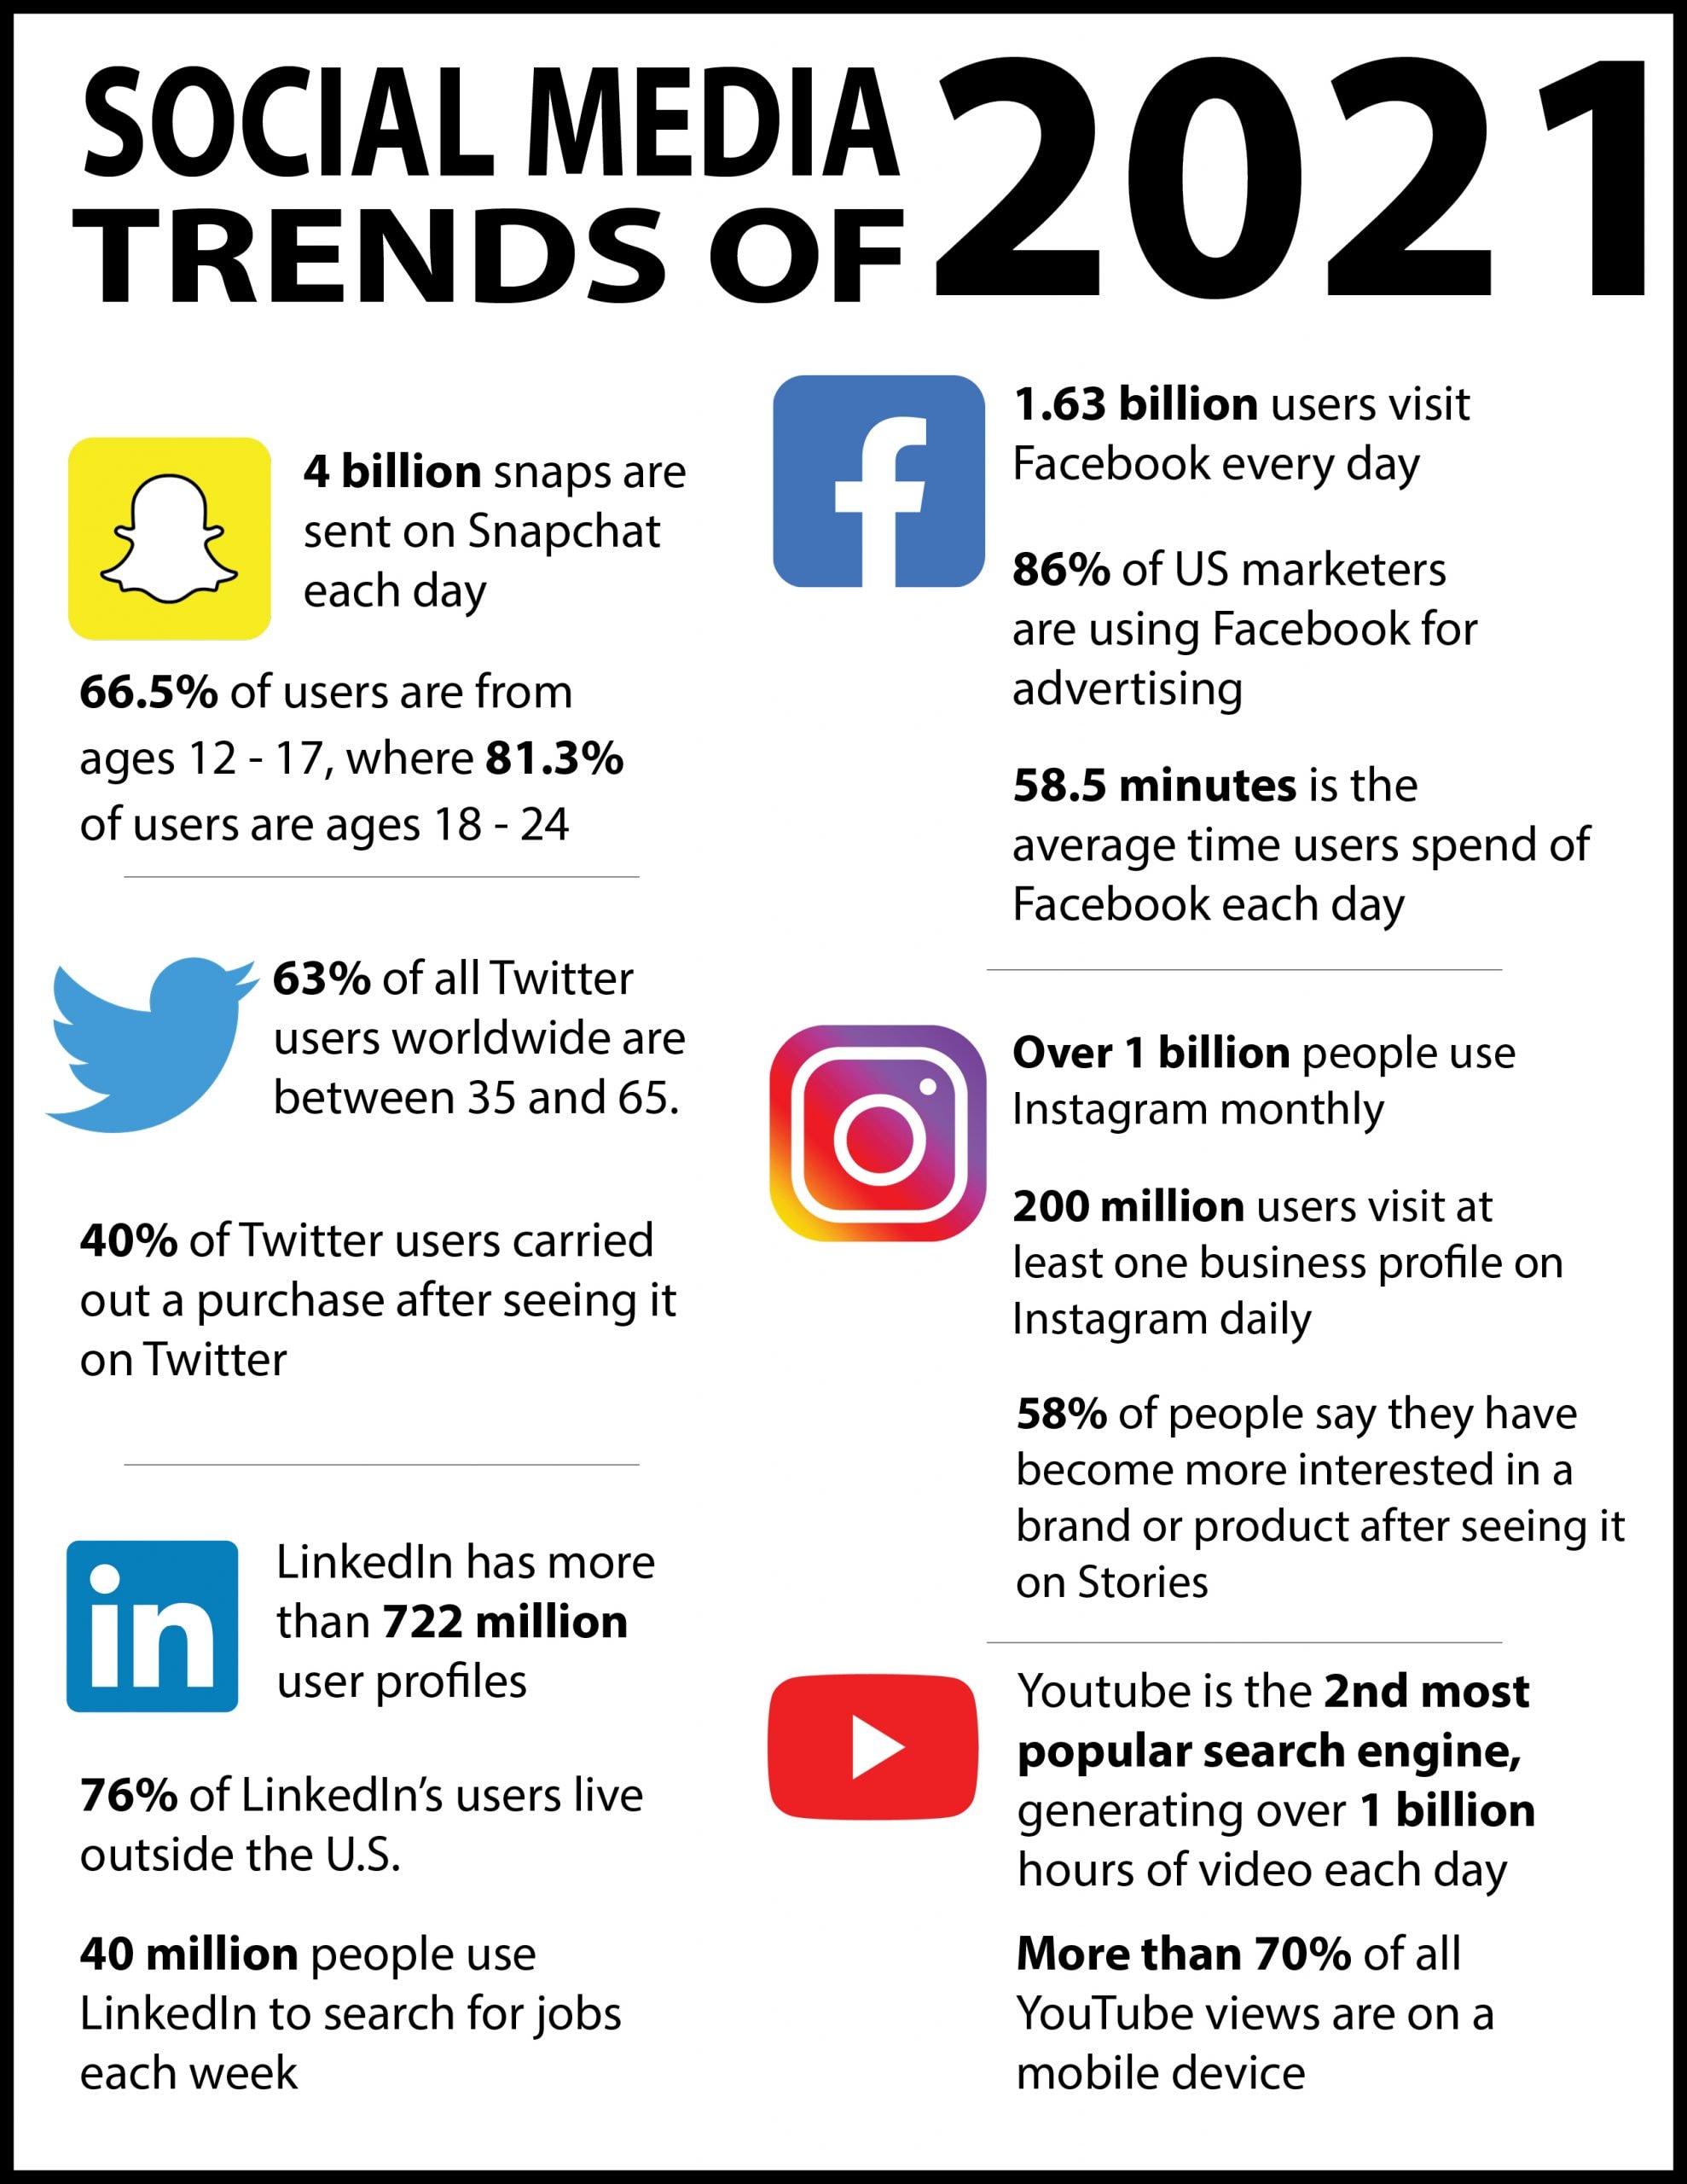 Social-Media-Trends-2021-300dpi-scaled.jpg